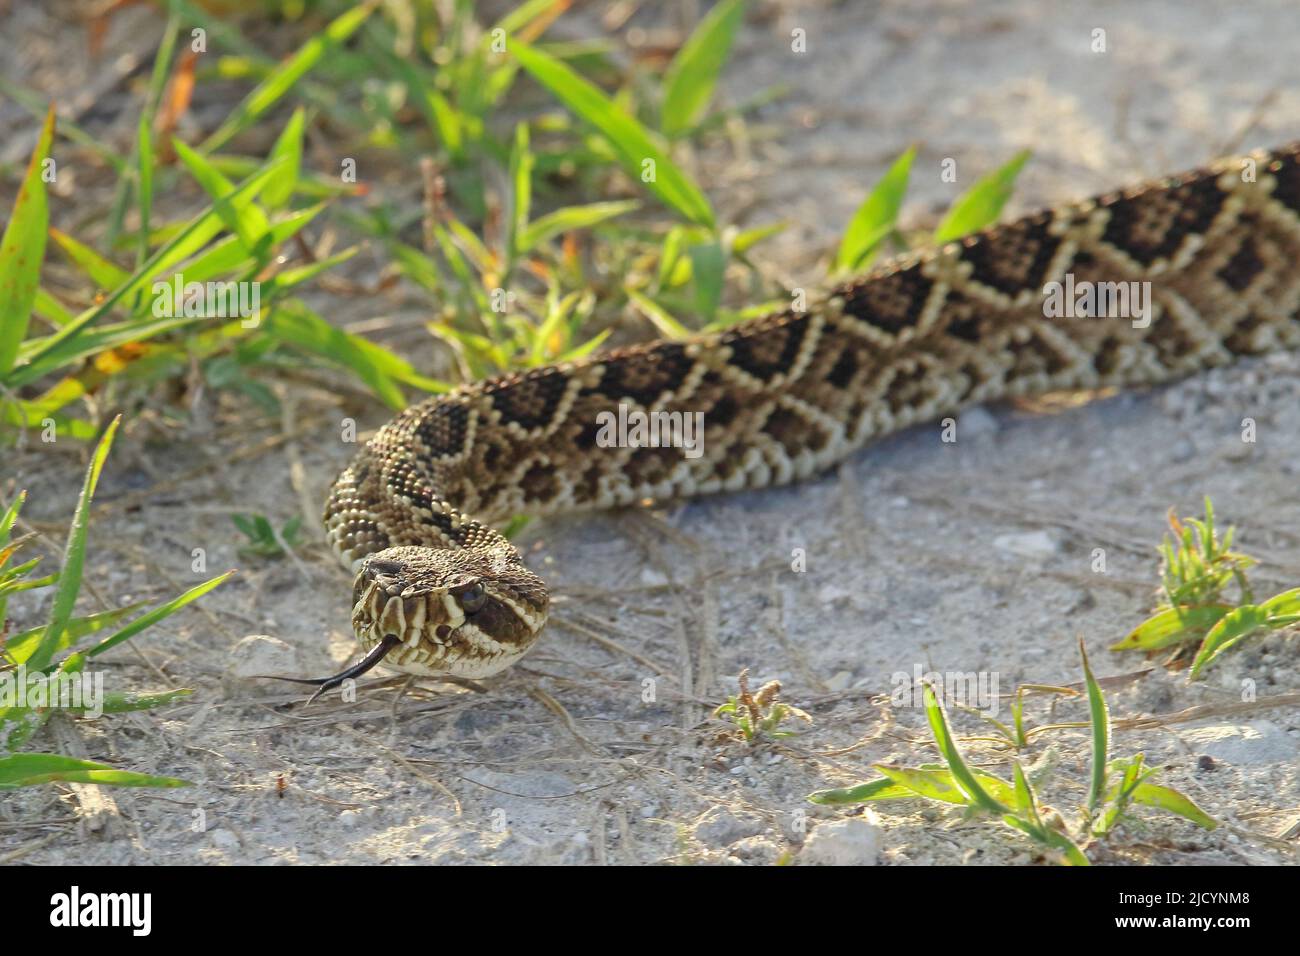 Eastern diamondback rattlesnake, venomous pit viper Stock Photo